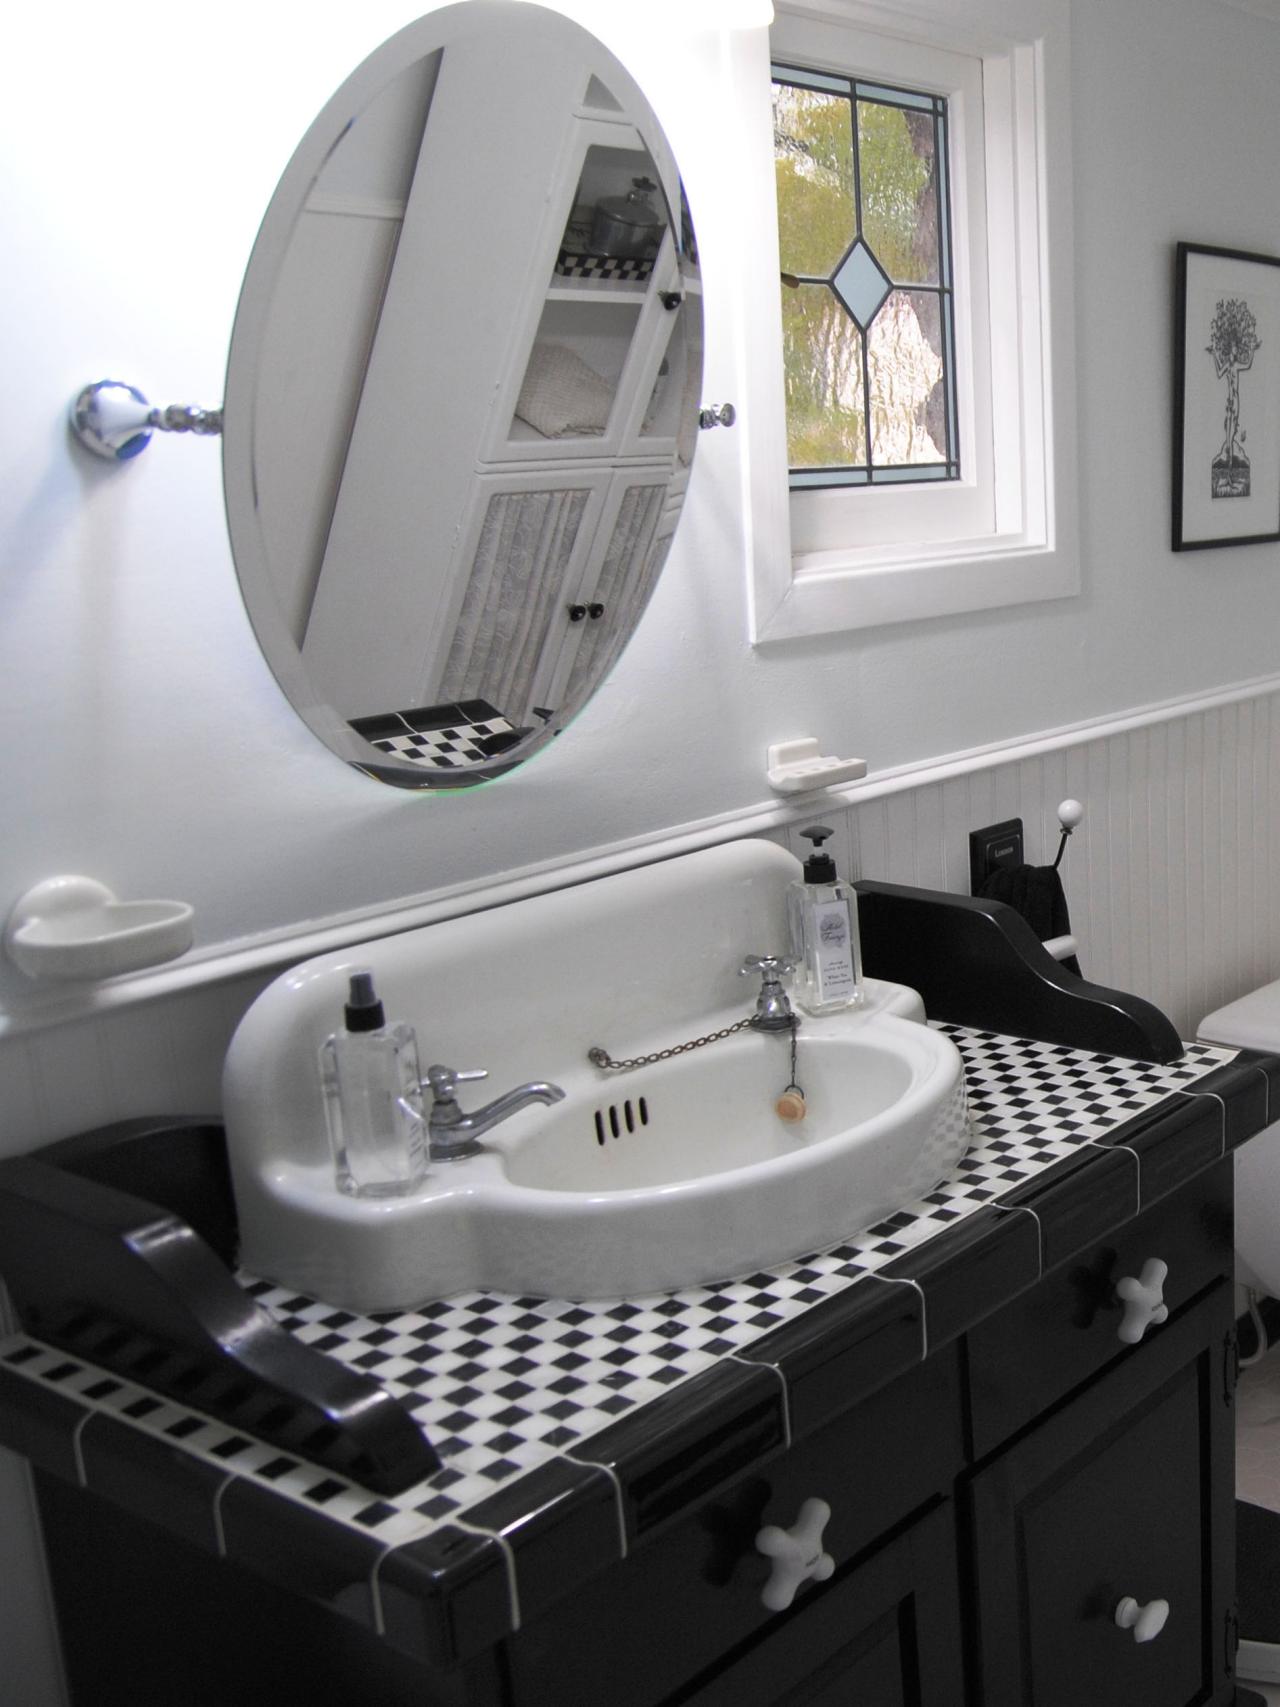 Old Dresser Into A Bathroom Vanity, Vintage Dresser Bathroom Vanity